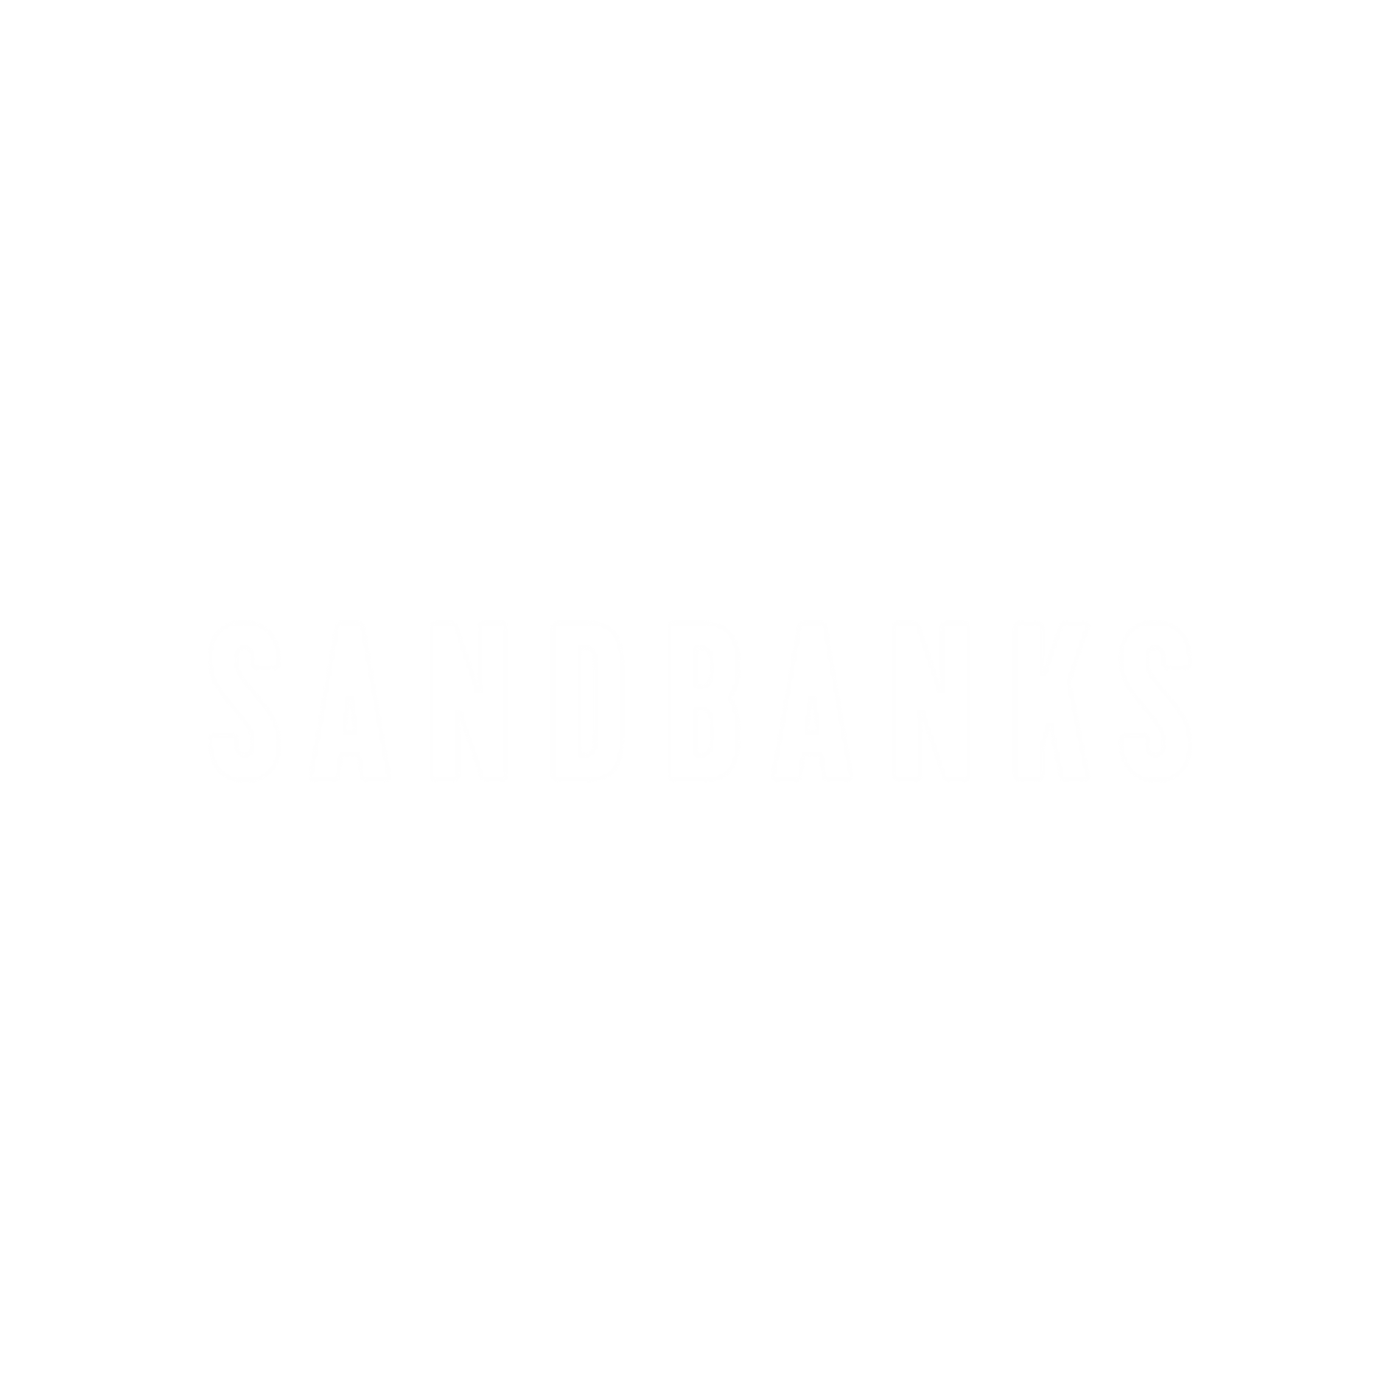 Sandbanks logo